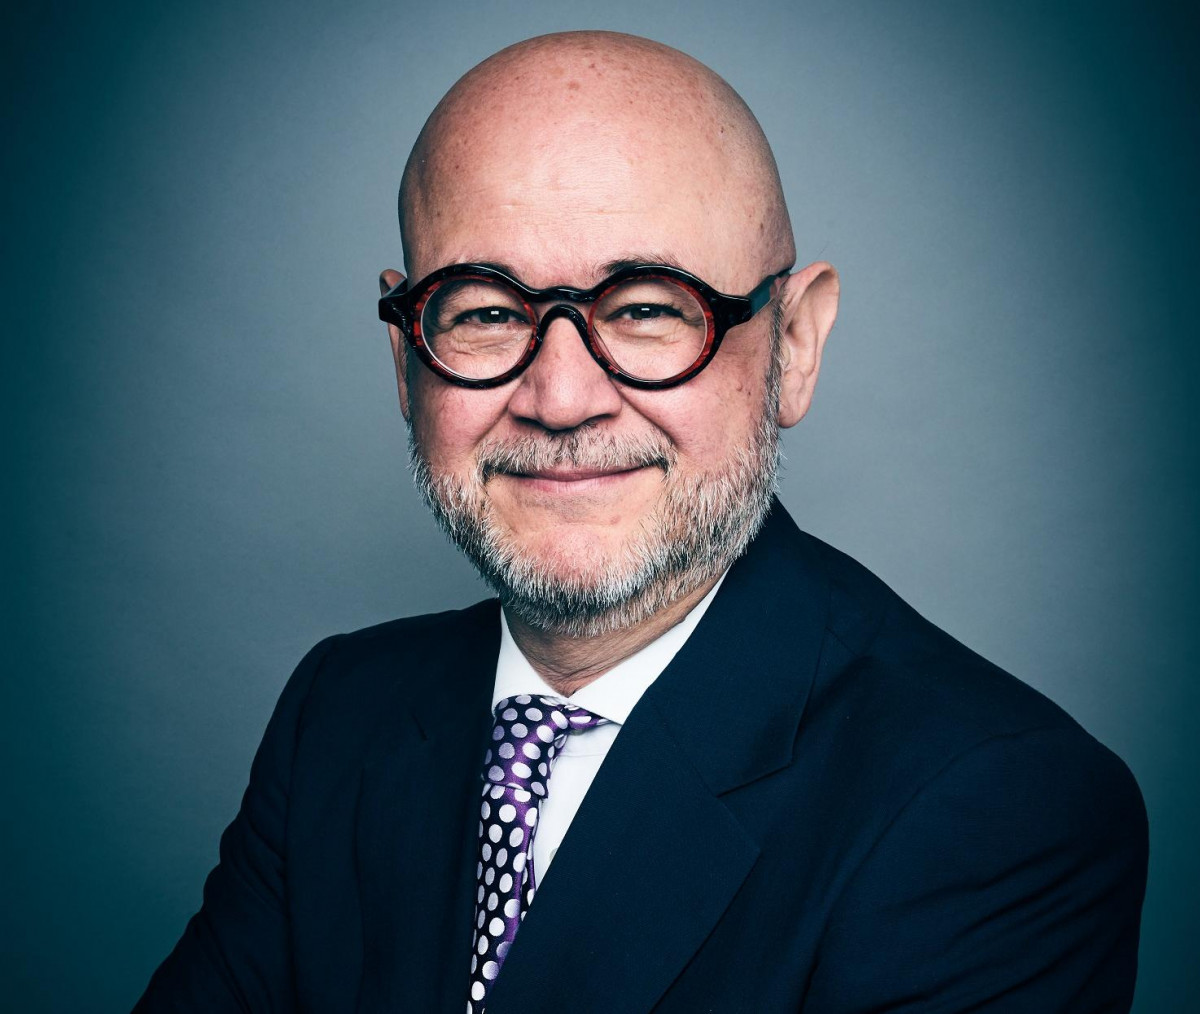 Димитрис Манкис, президент и управляющий директор Wyndham Hotels & Resorts по региону EMEA